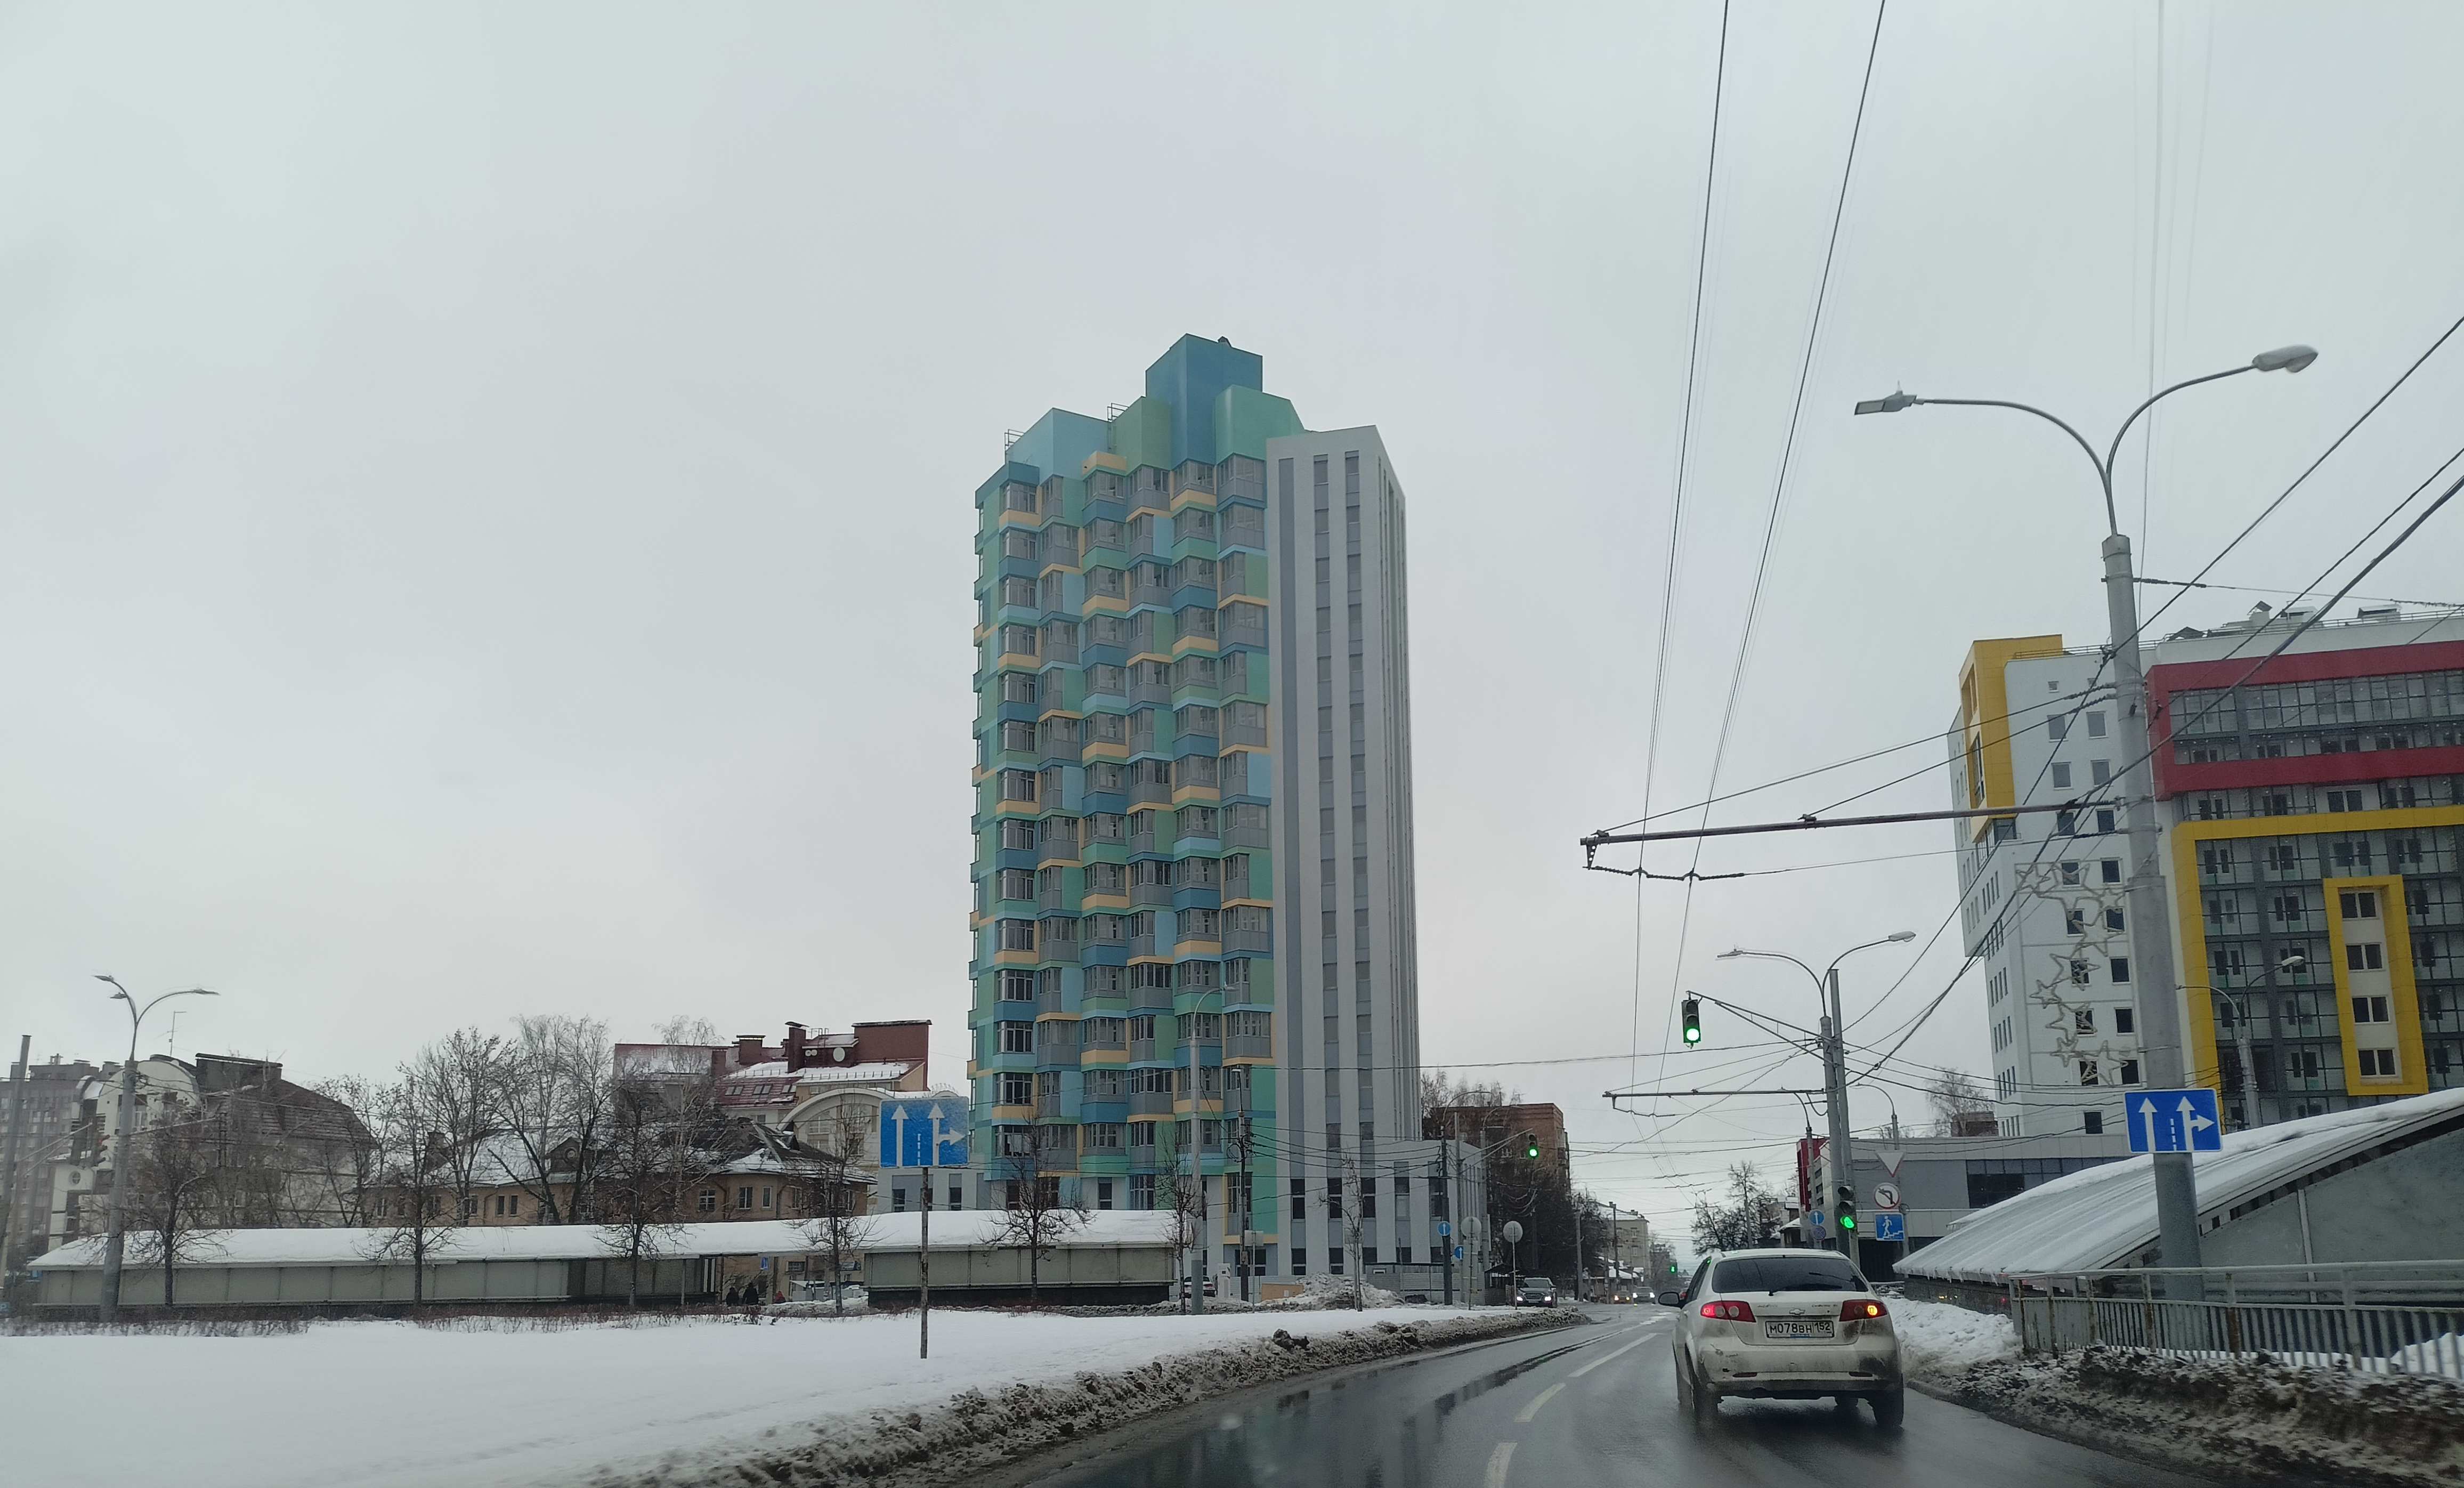 Госэкспертиза одобрила проект «Дома с видом на небо» в Нижнем Новгороде - фото 1